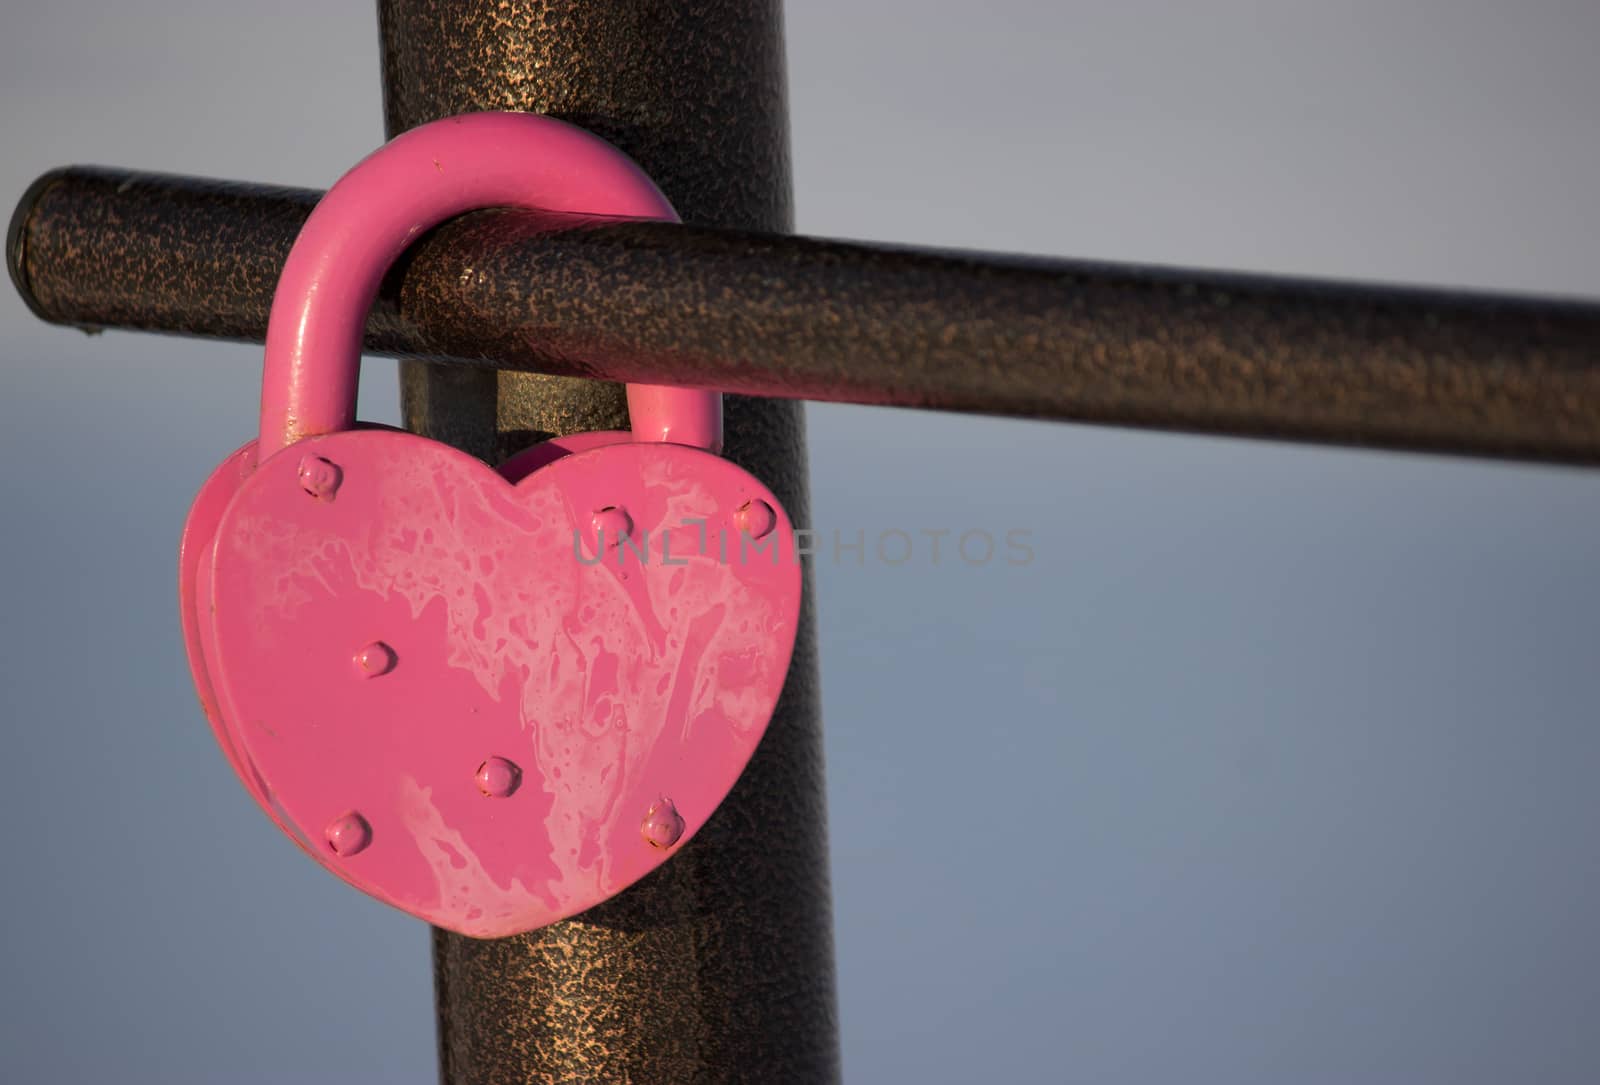 heart shaped padlock hang on the fence